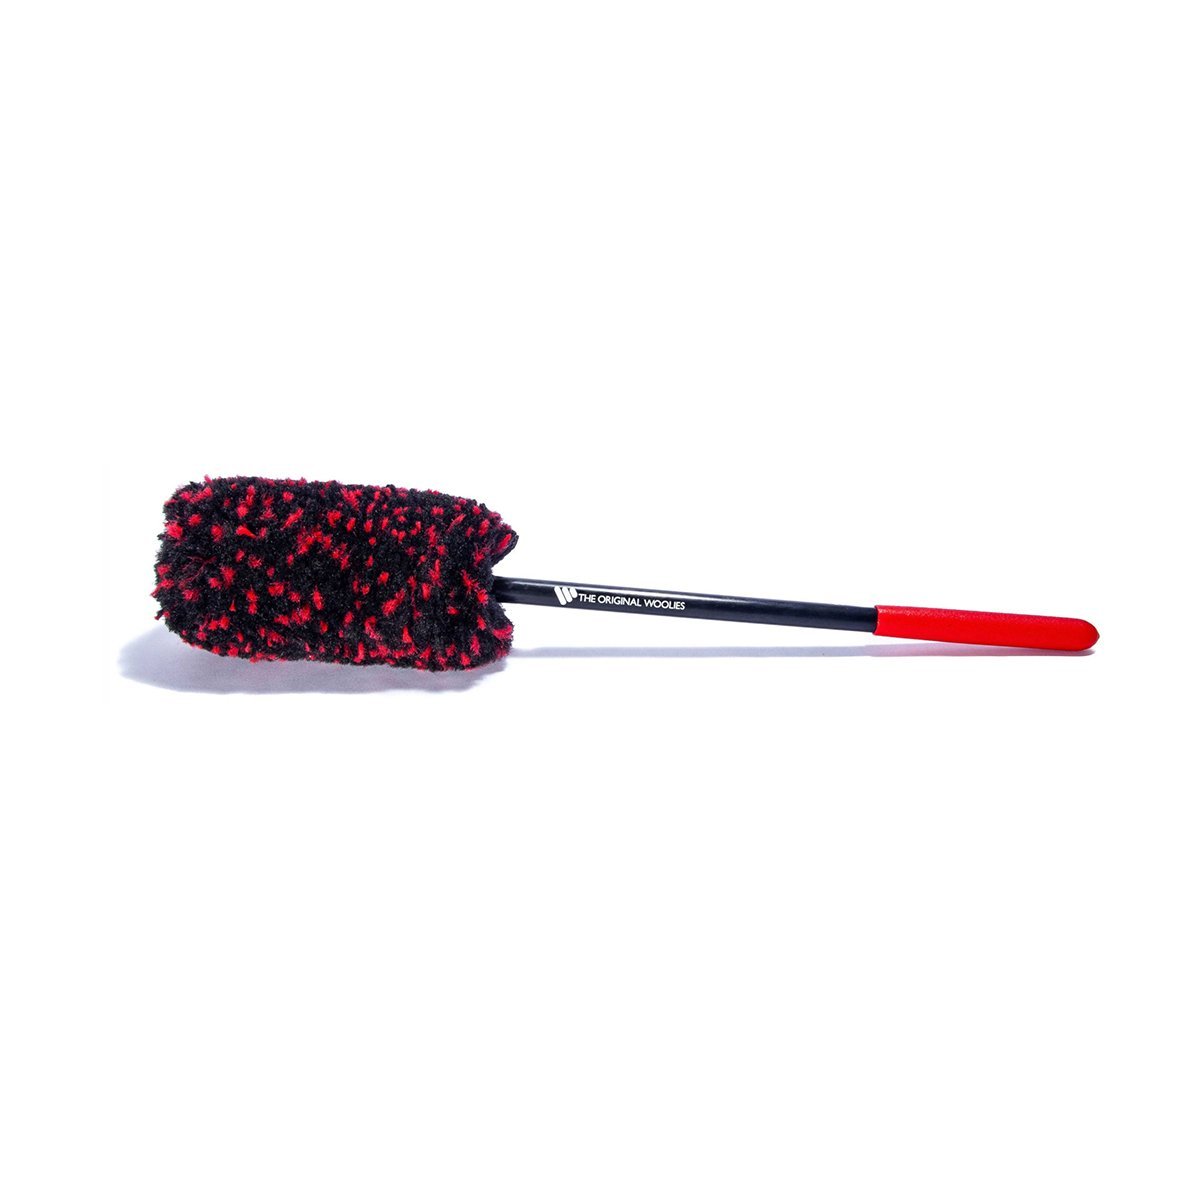  Wheel Woolie Brush Set - 20 Boar's Hair Wheel Brush & Lug Nut  1 Brush : Automotive